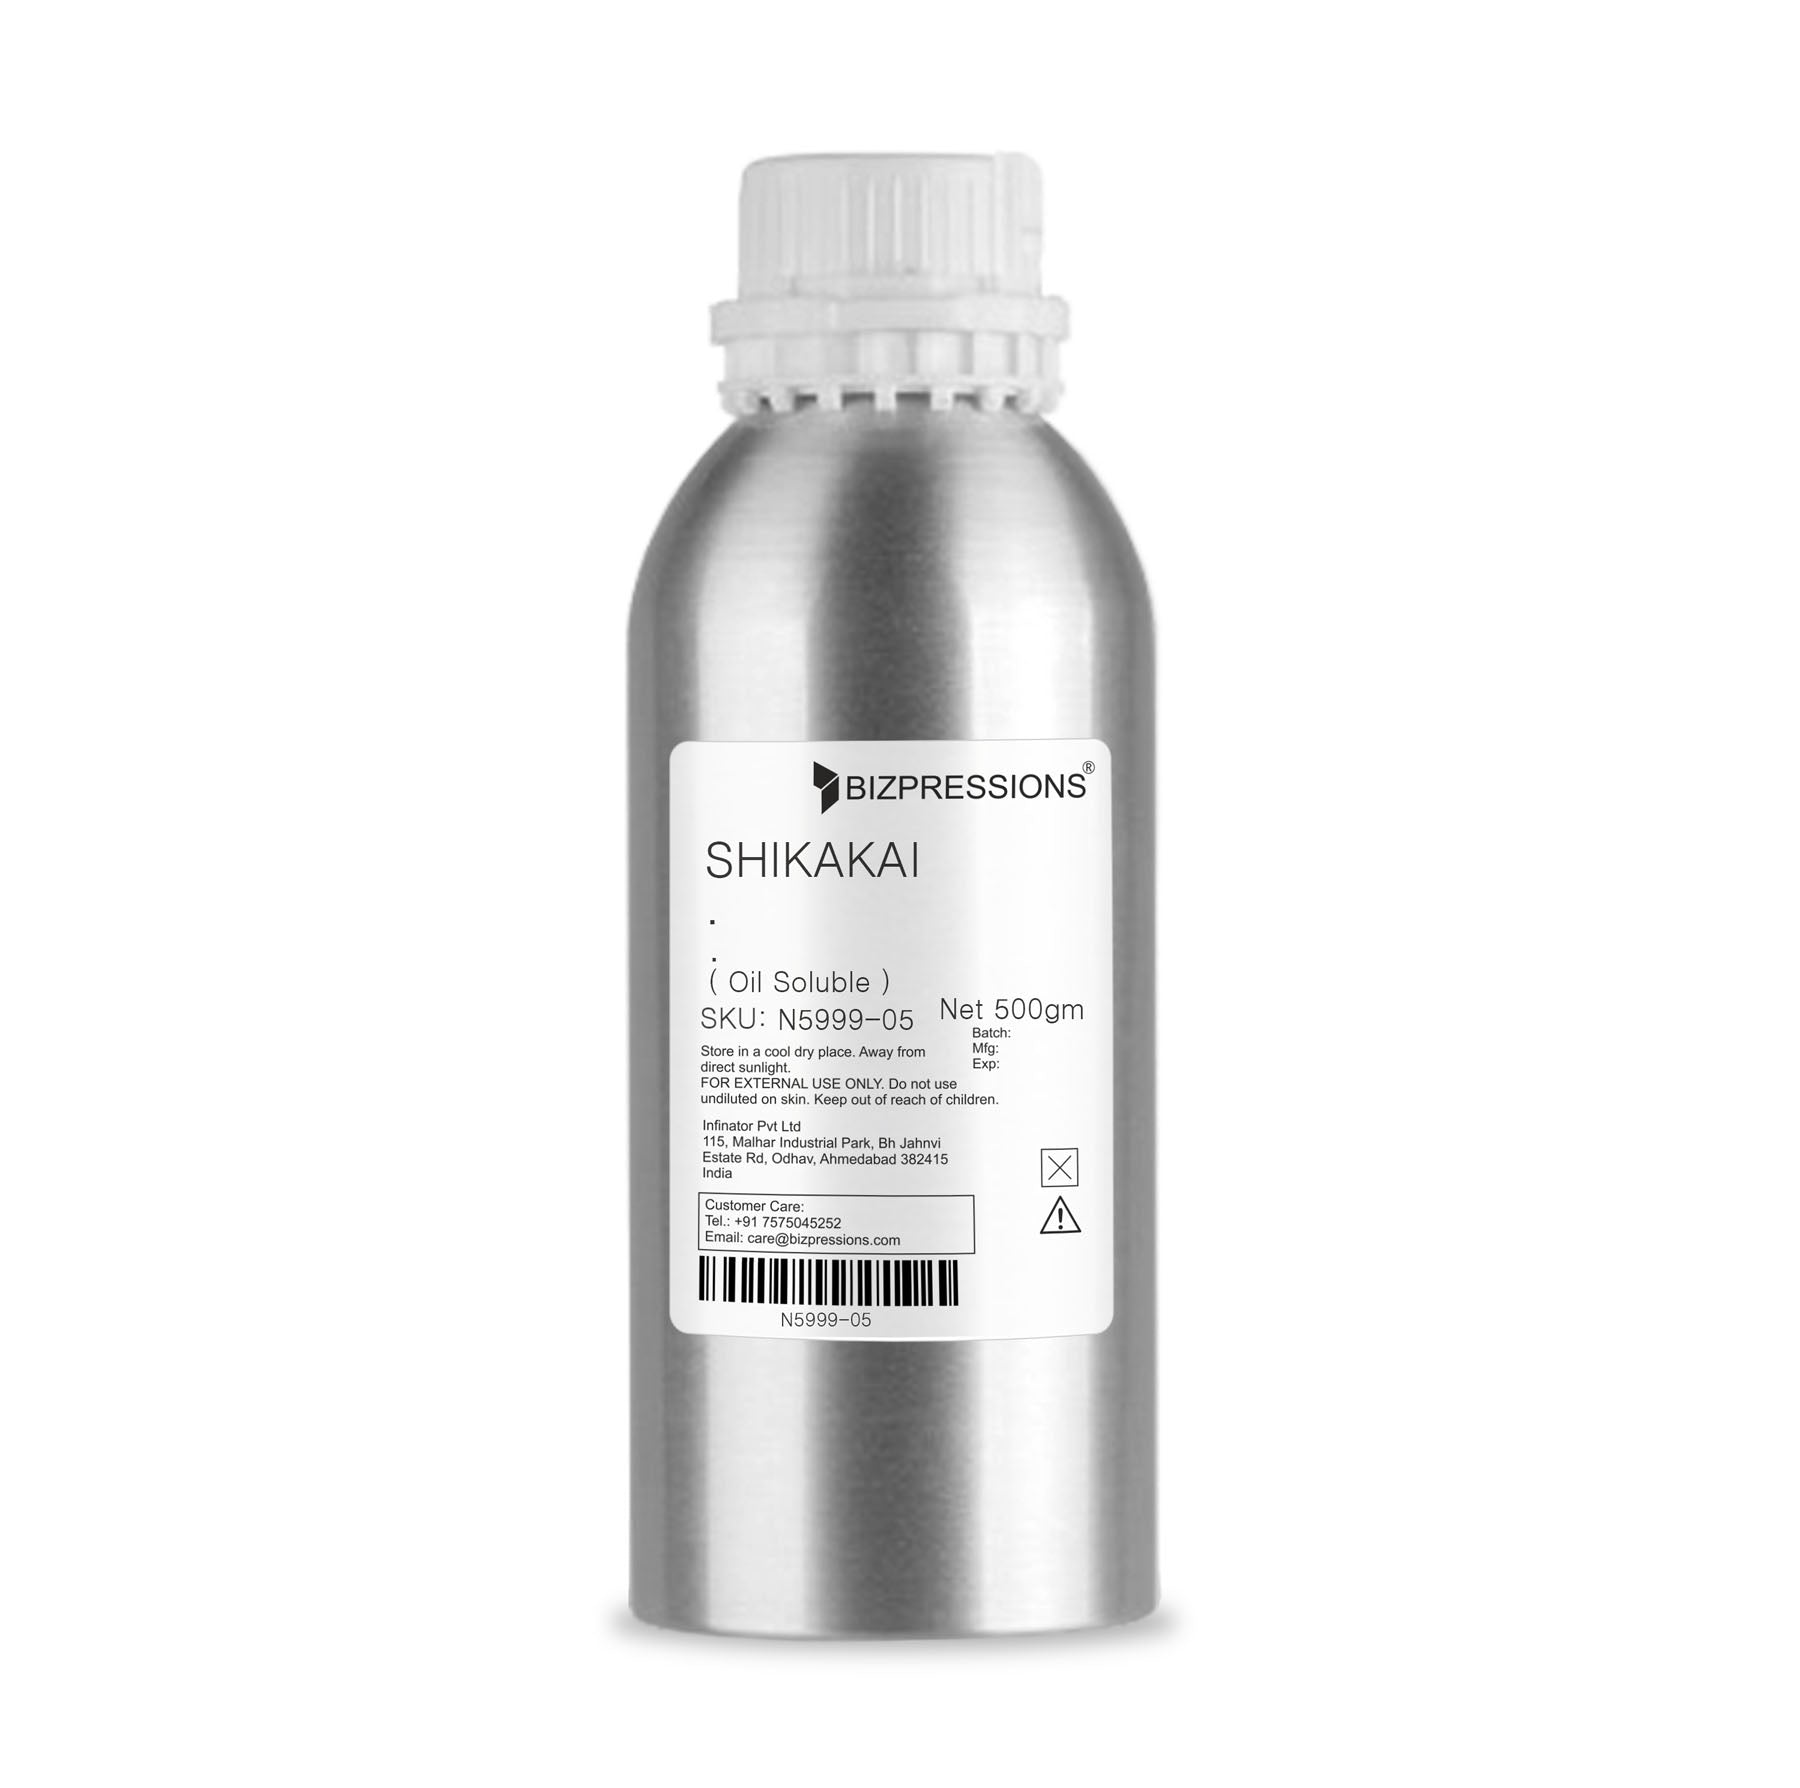 SHIKAKAI - Fragrance ( Oil Soluble ) - 500 gm